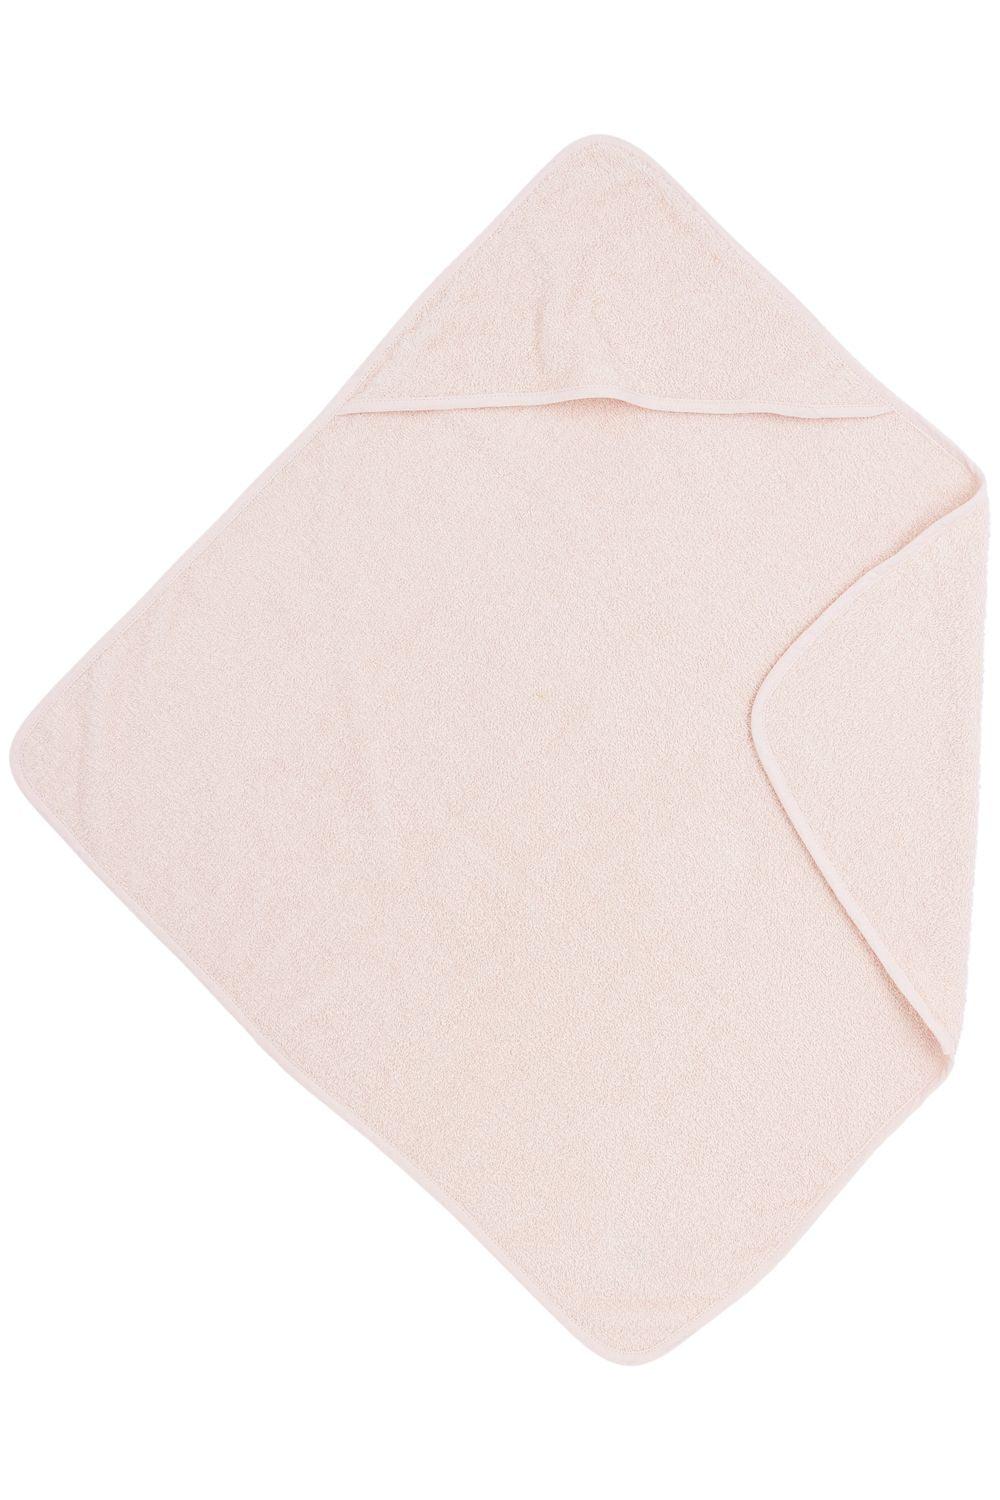 Meyco - Meyco Baby Bathcape - Terry Uni Soft Pink (75x75cm) - Mari Kali Stores Cyprus